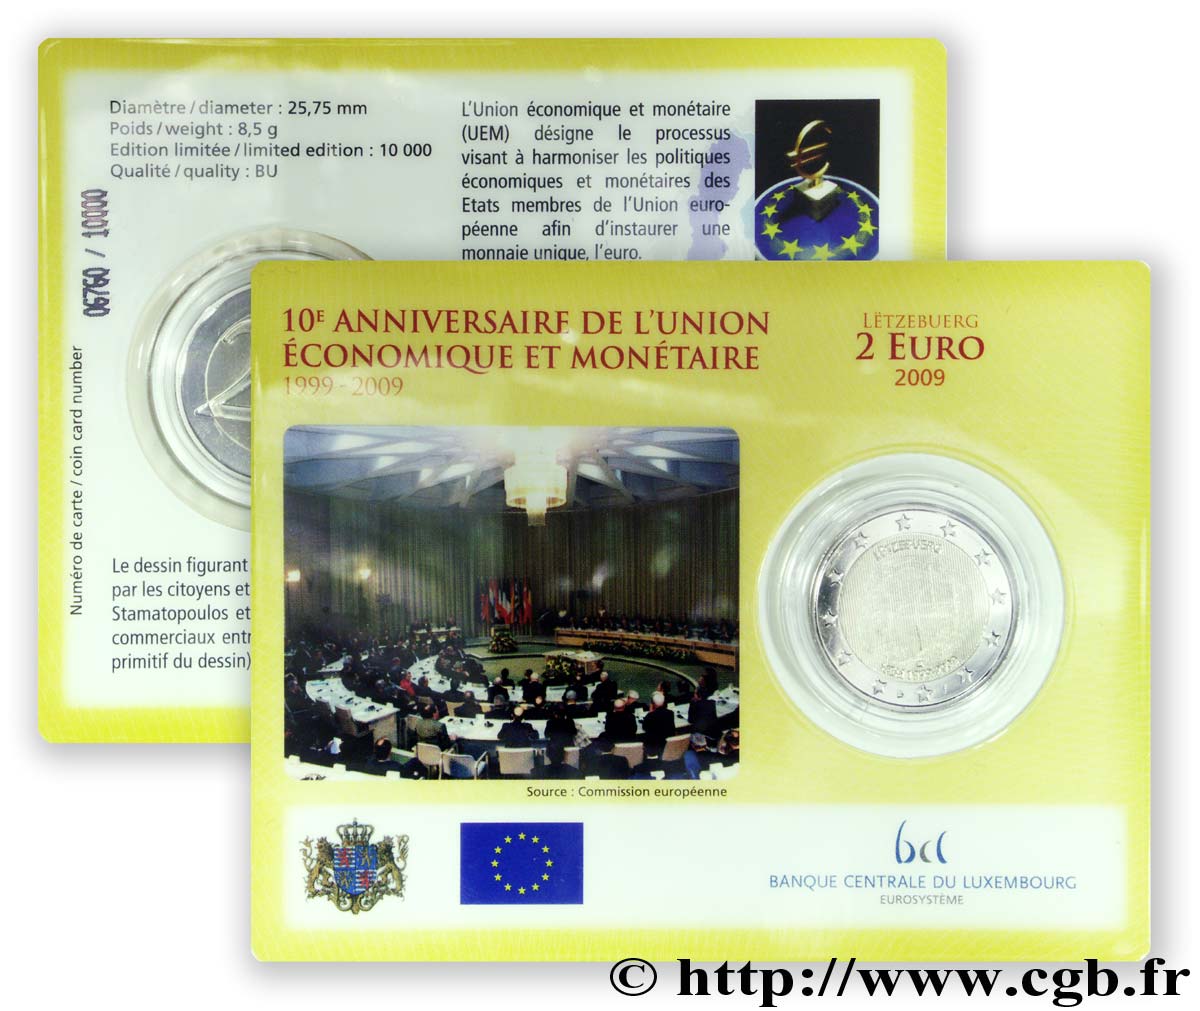 LUXEMBOURG Coin-Card 2 Euro 10ème ANNIVERSAIRE DE L’EURO  2009 Brilliant Uncirculated